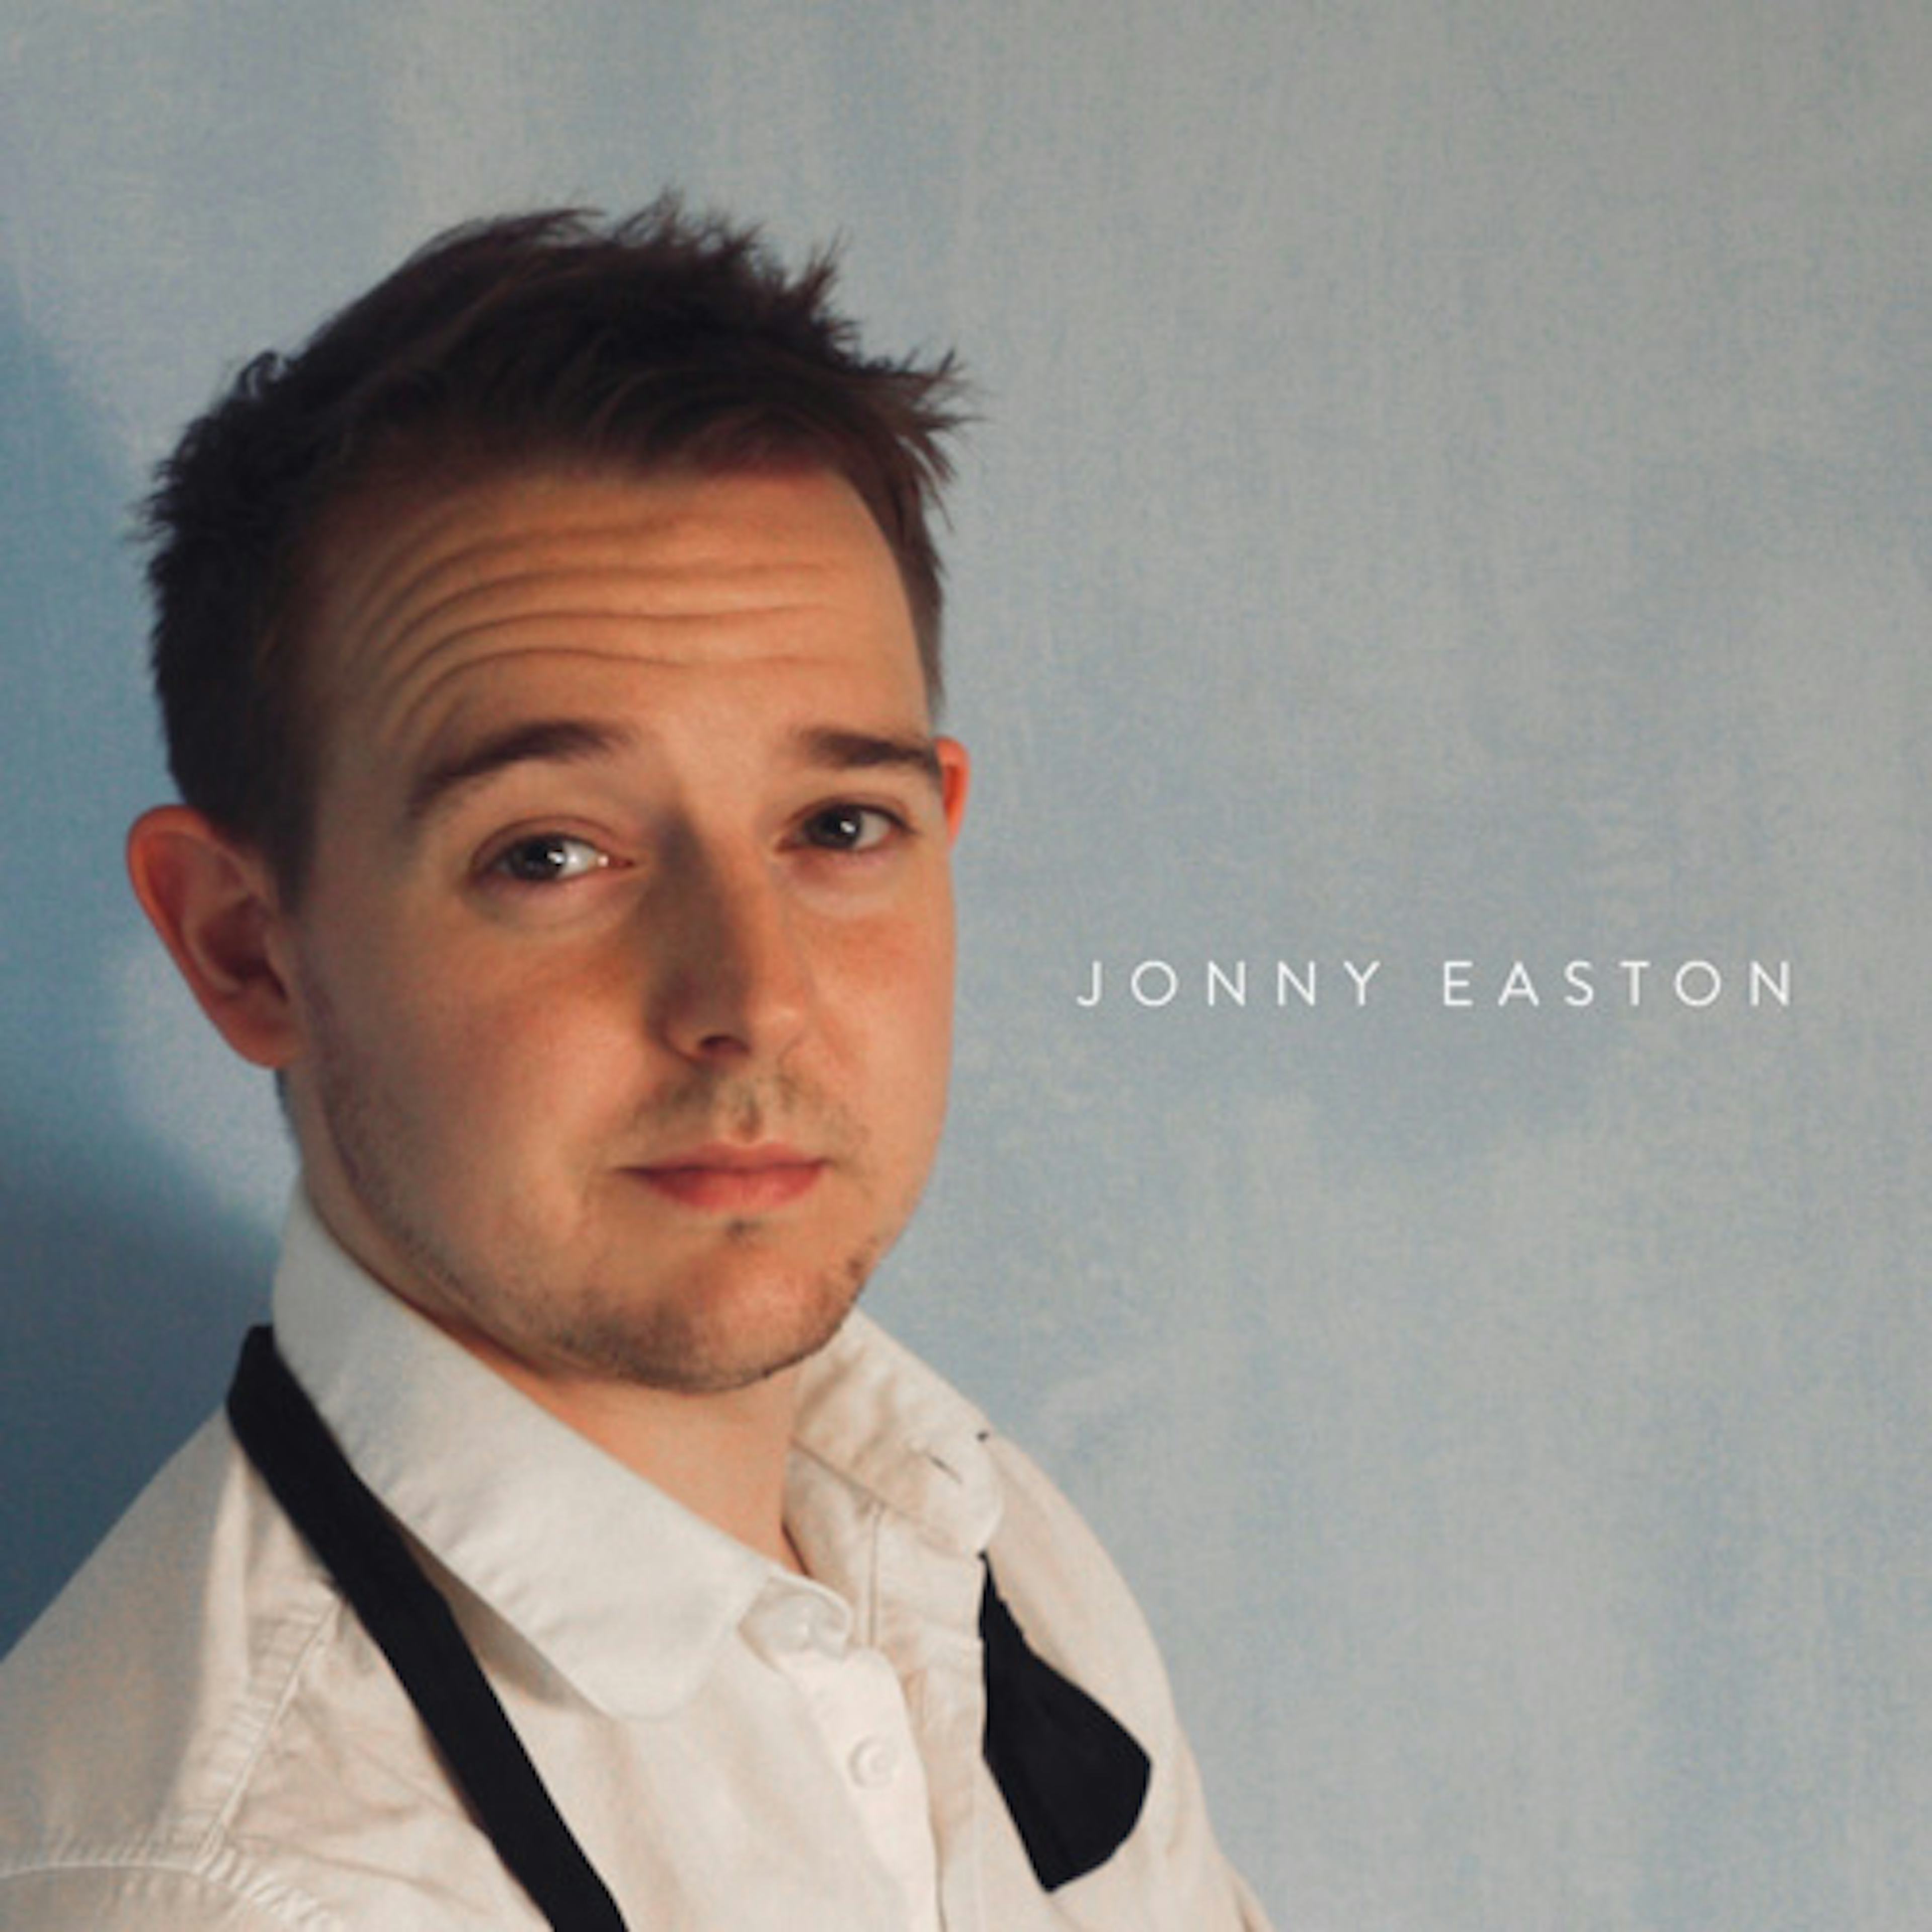 Jonny Easton